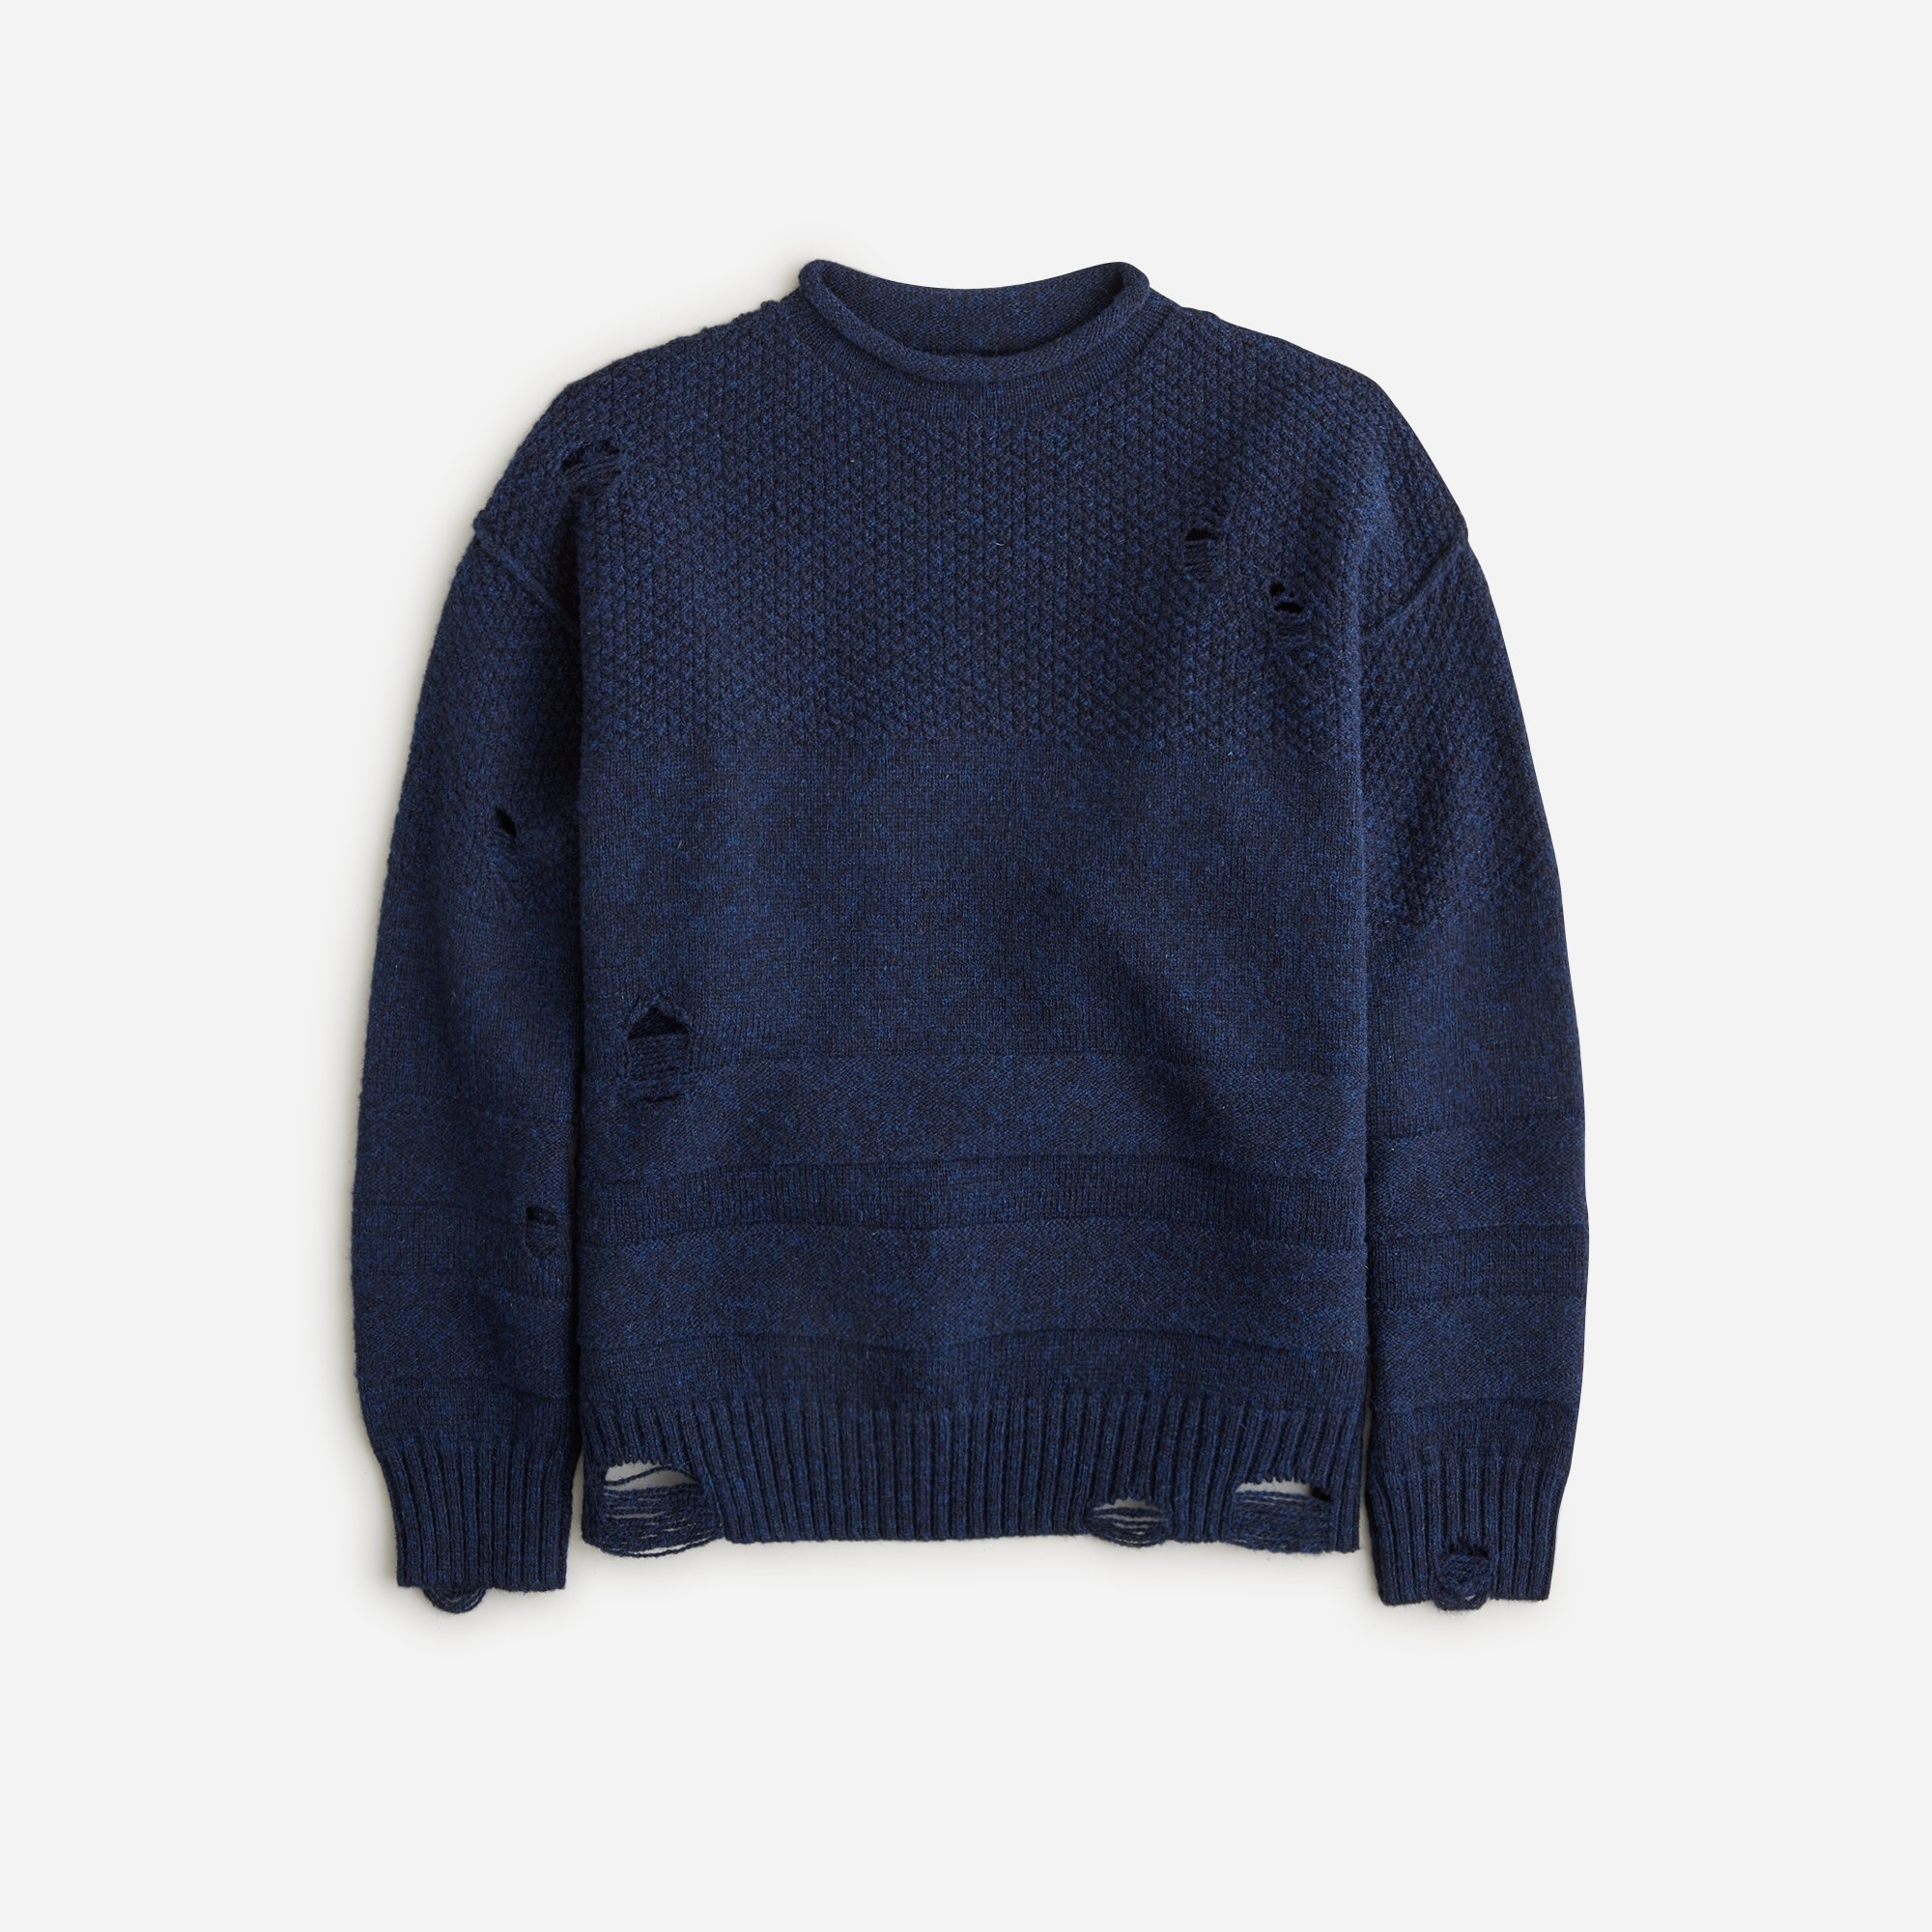 Buy J.Crew Union x J.Crew Rollneck Knit Sweater (Midnight Blue